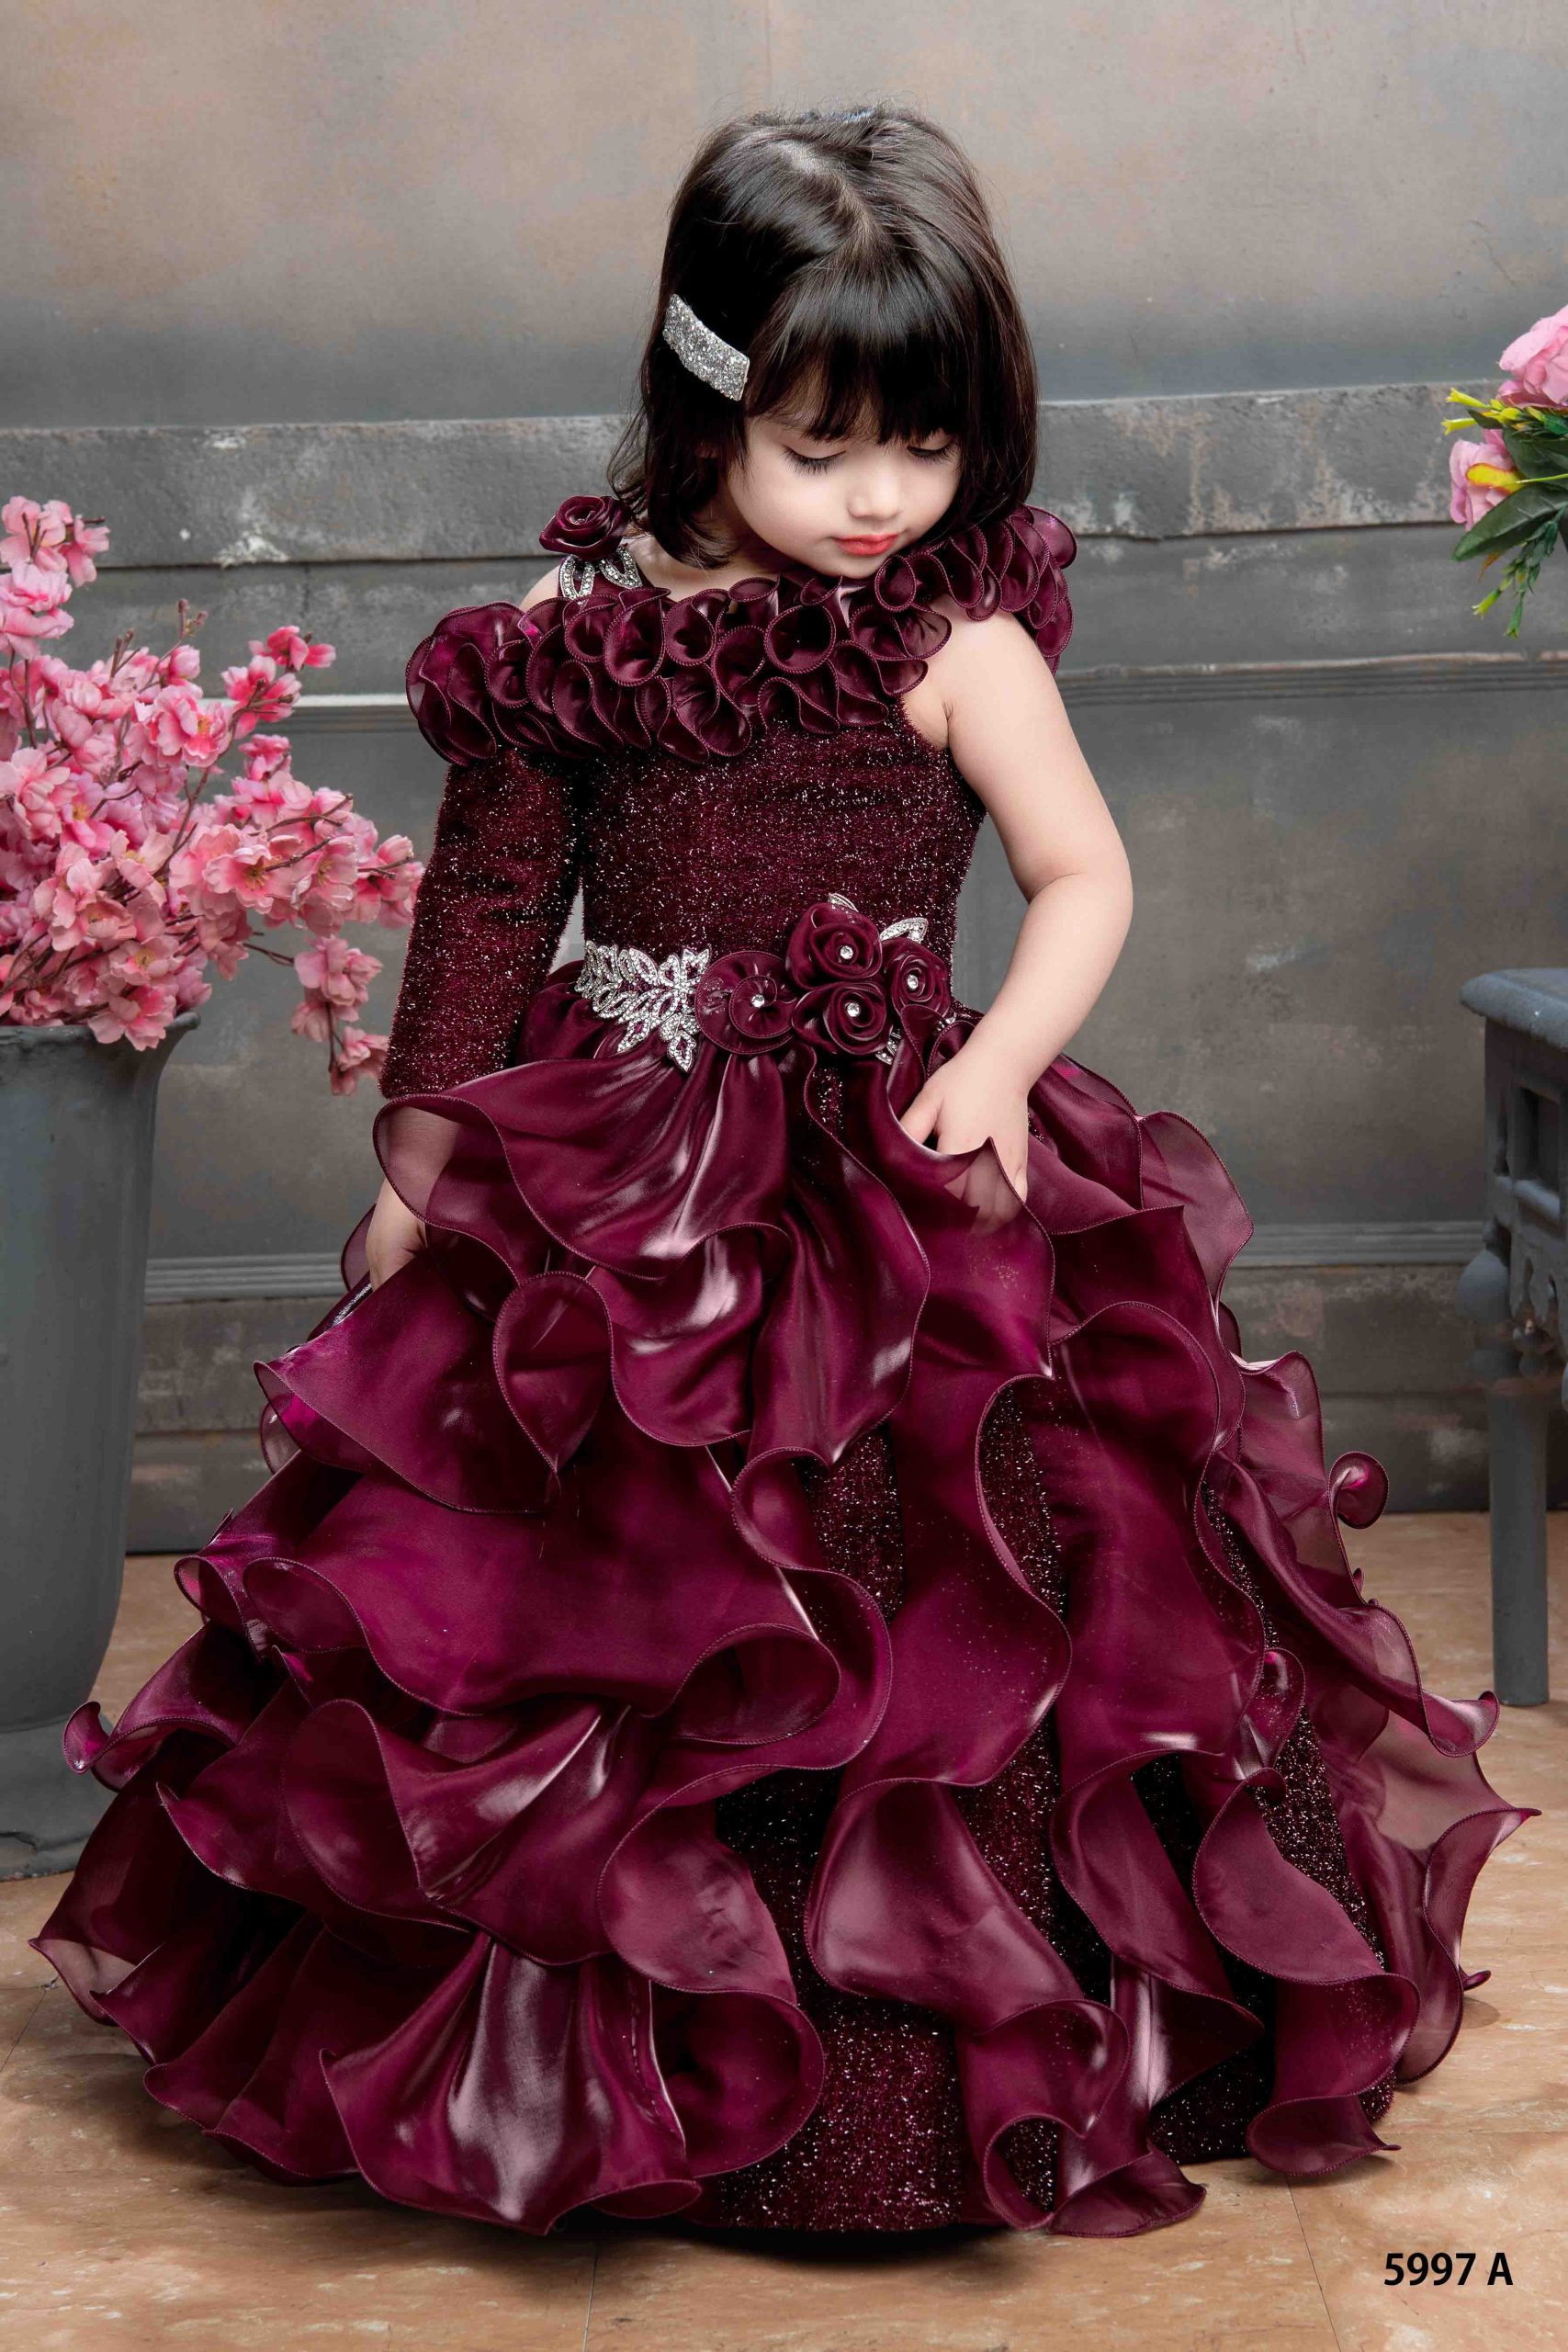 fcity.in - Attractive Kid Girl Dress / Attractive Kid Girl Dresses Vol 20